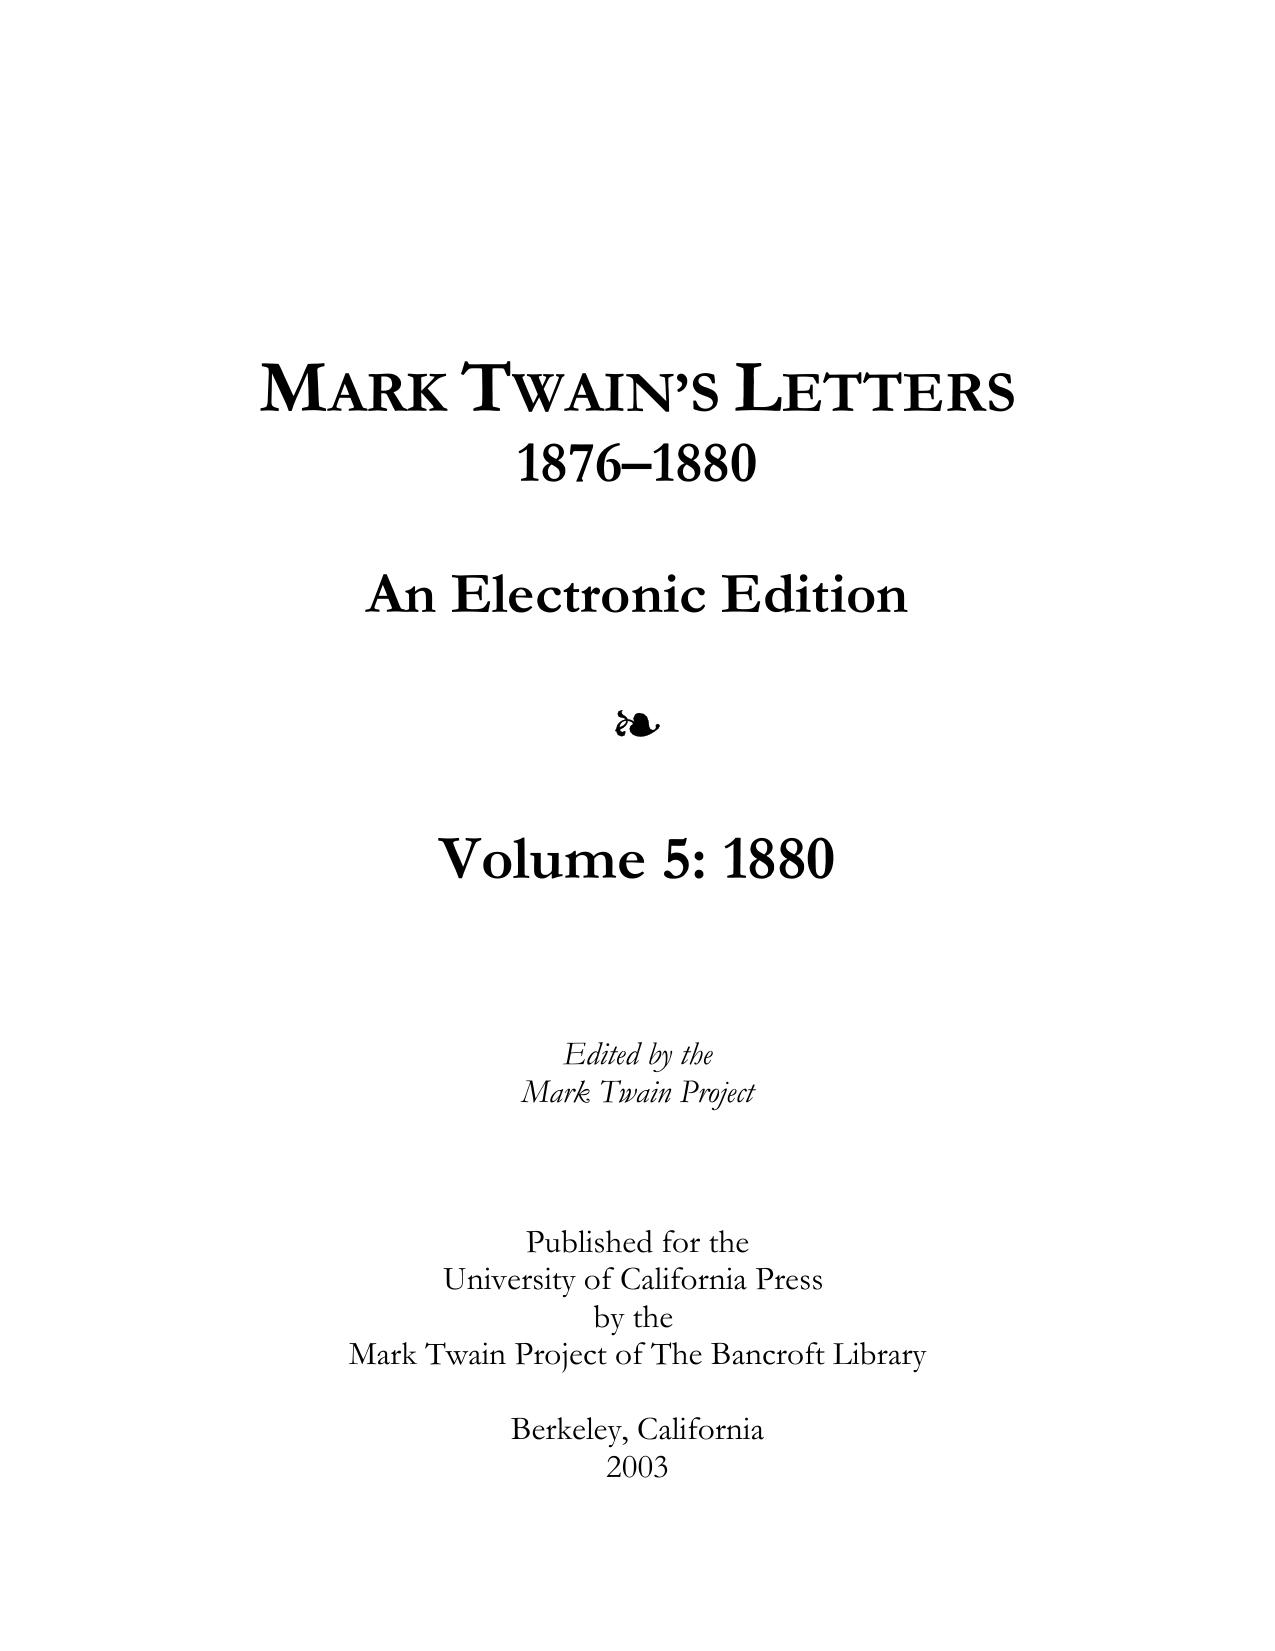 Mark Twain's Letters, 1876-1880, An Electronic Edition, Volume 5: 1880, © 2001 The Mark Twain Foundation